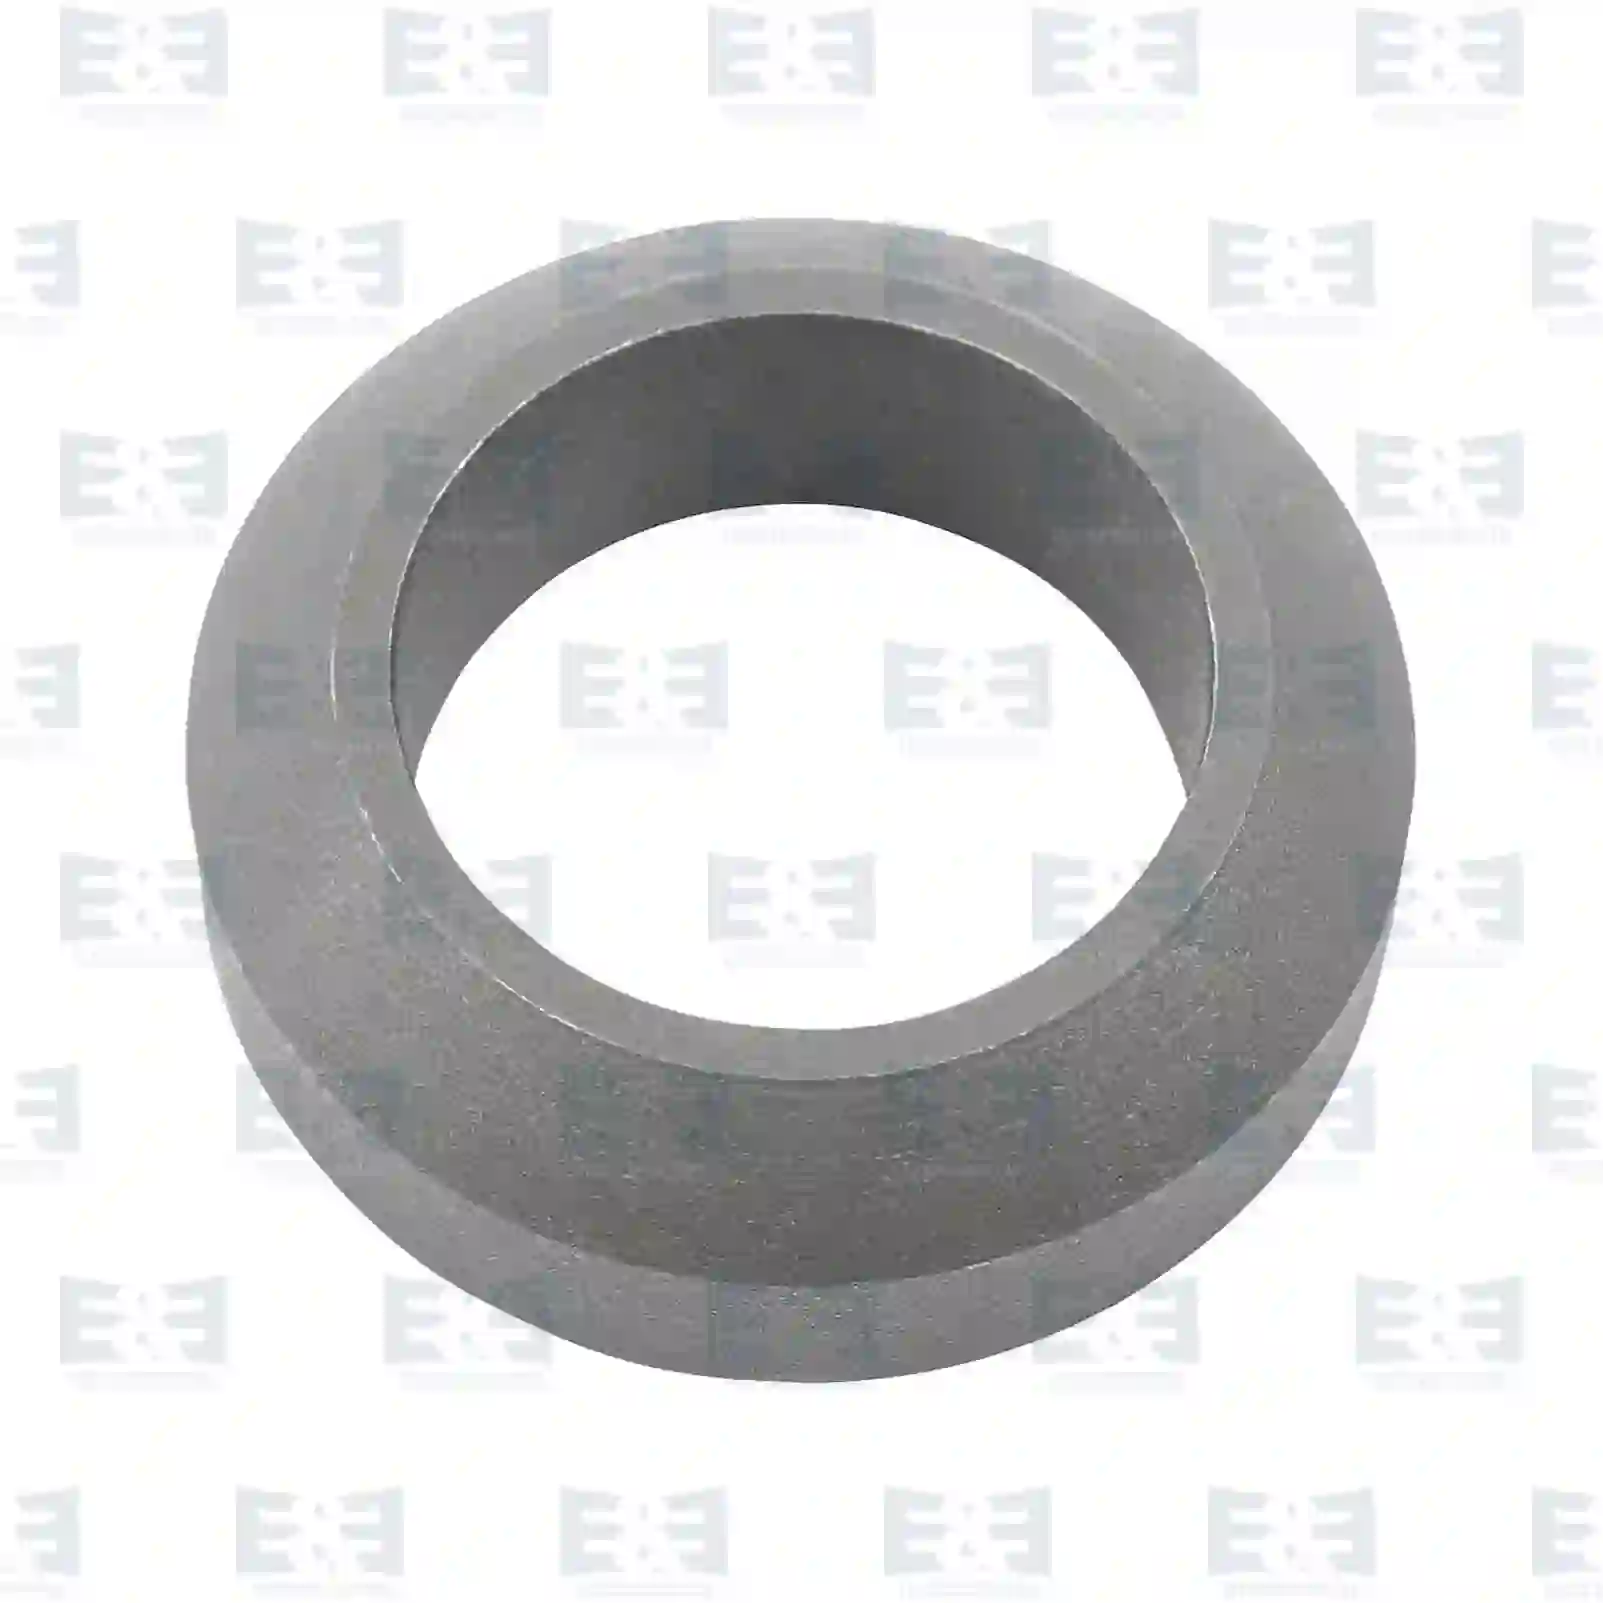  Washer, for u-bolt || E&E Truck Spare Parts | Truck Spare Parts, Auotomotive Spare Parts